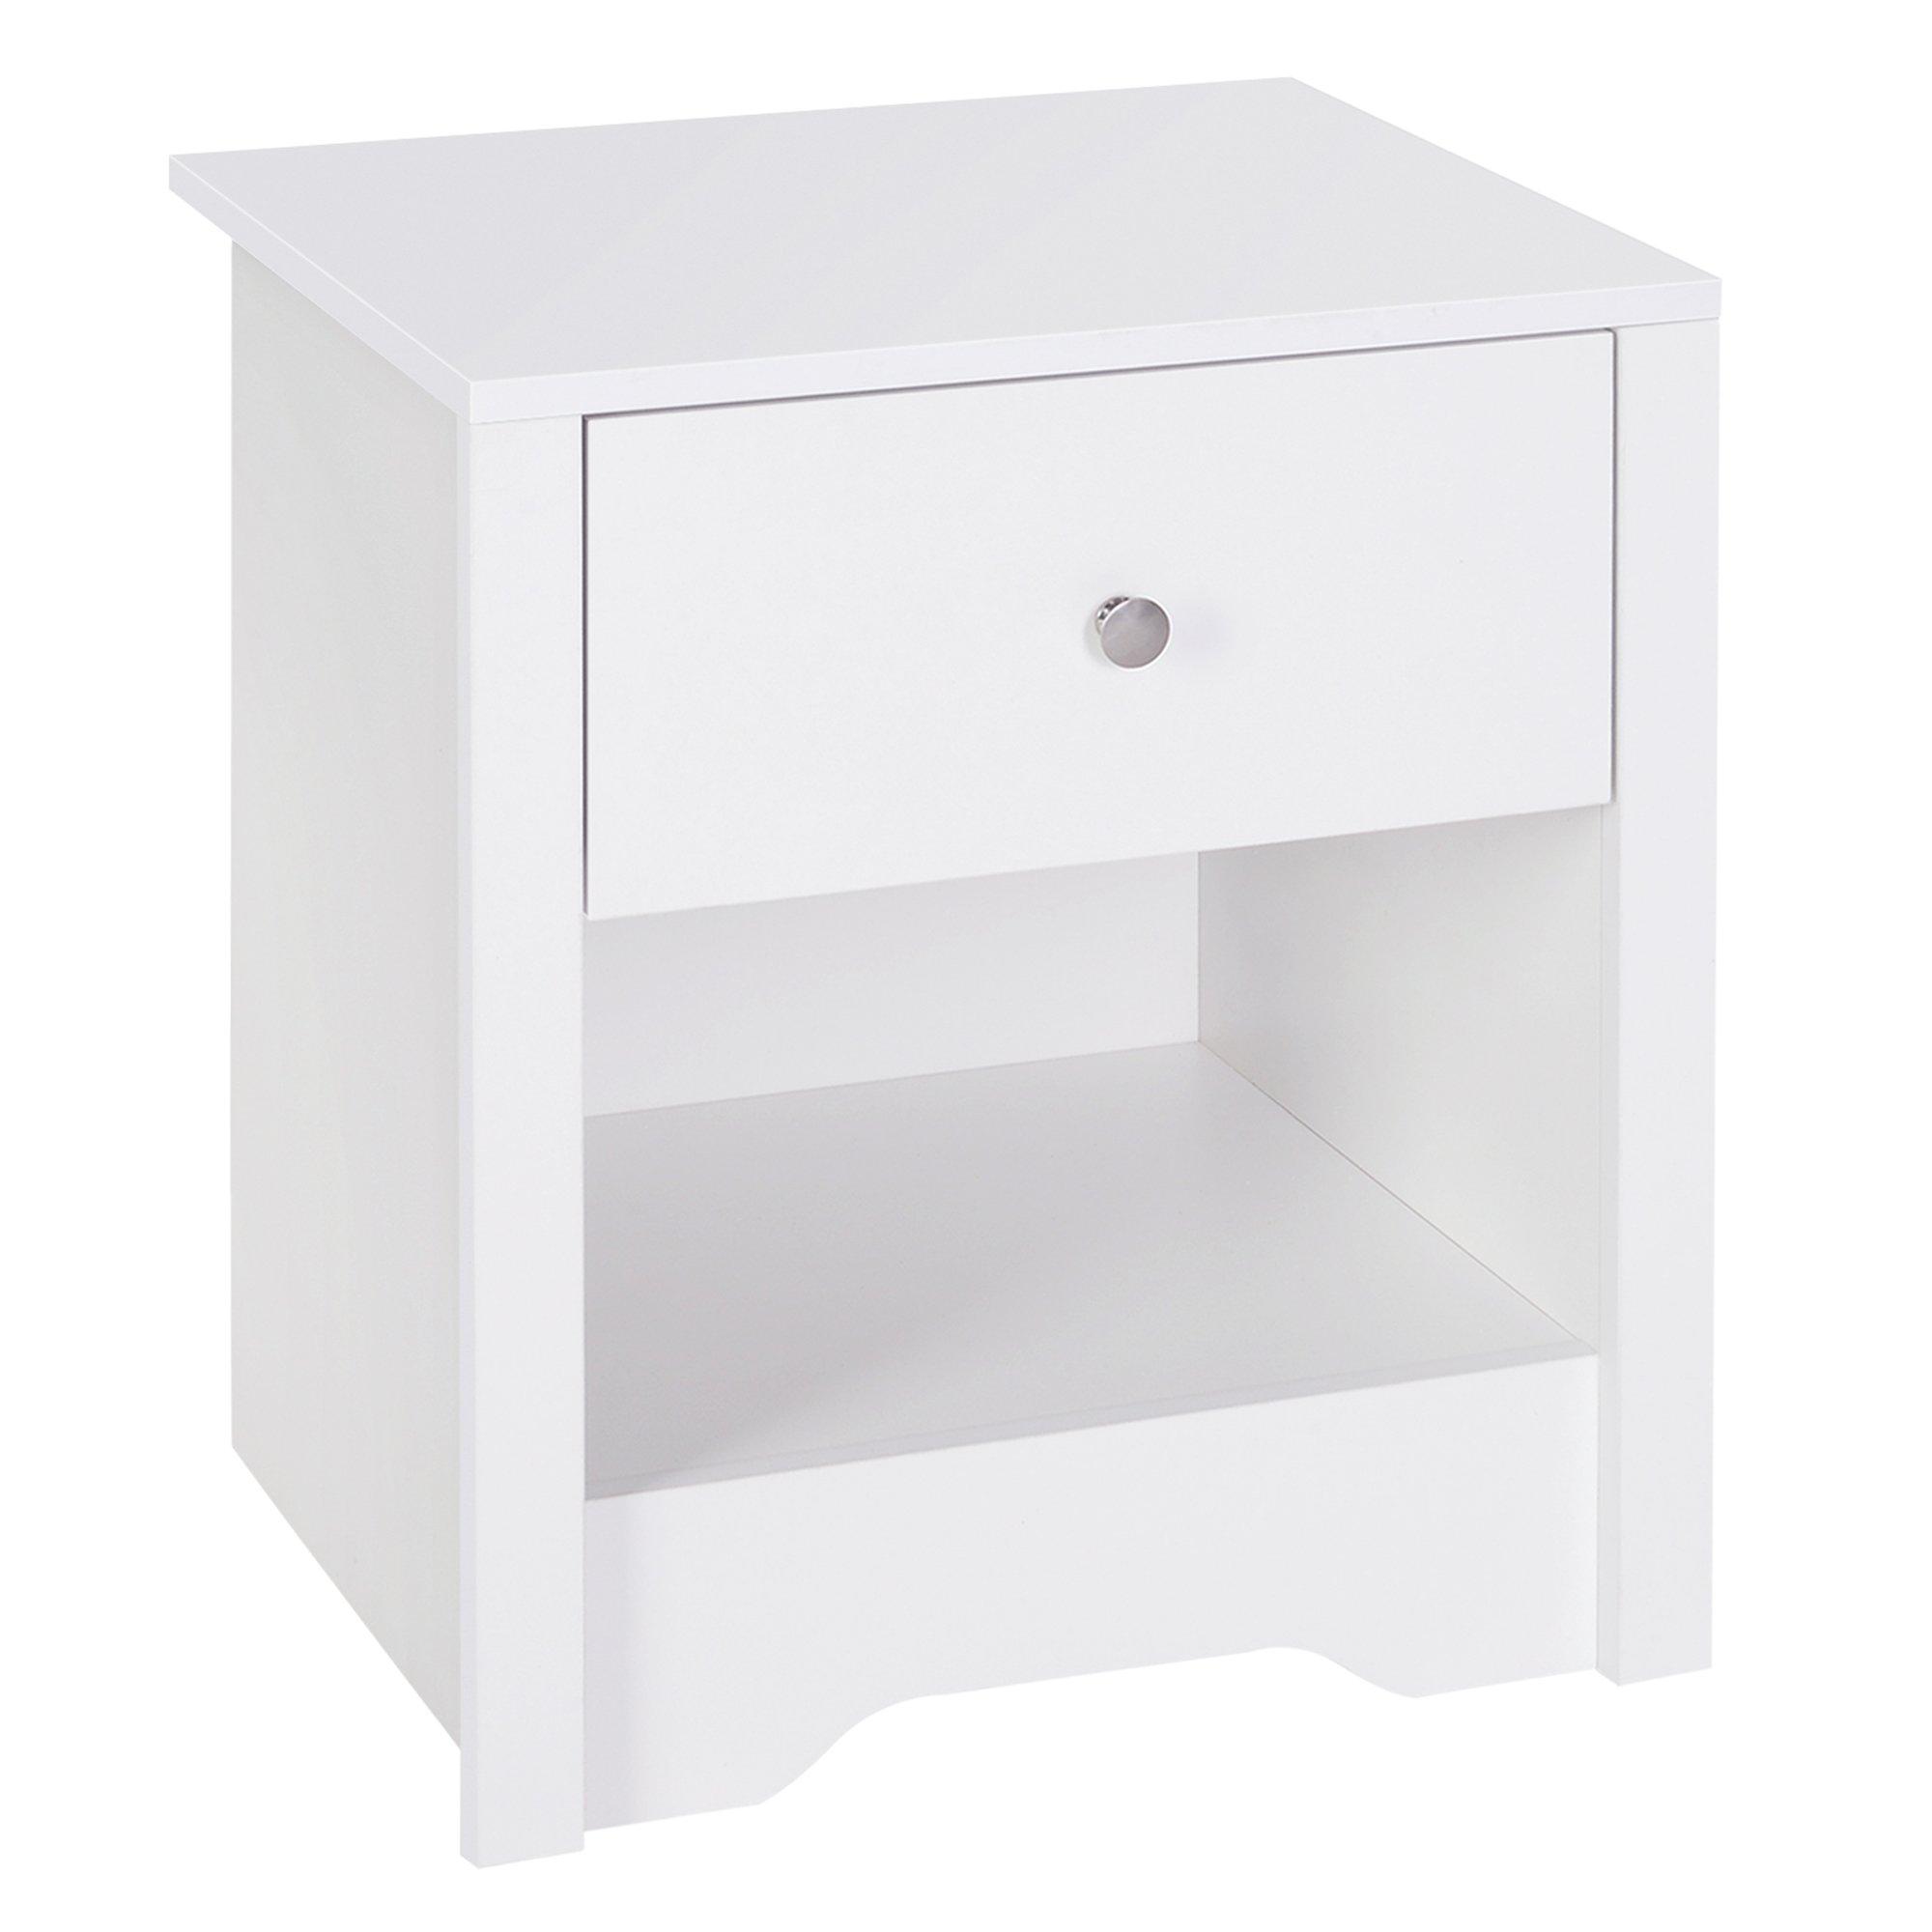 Bedside Table Unit Drawer Shelf Cabinet Chest Solid Wood Furniture